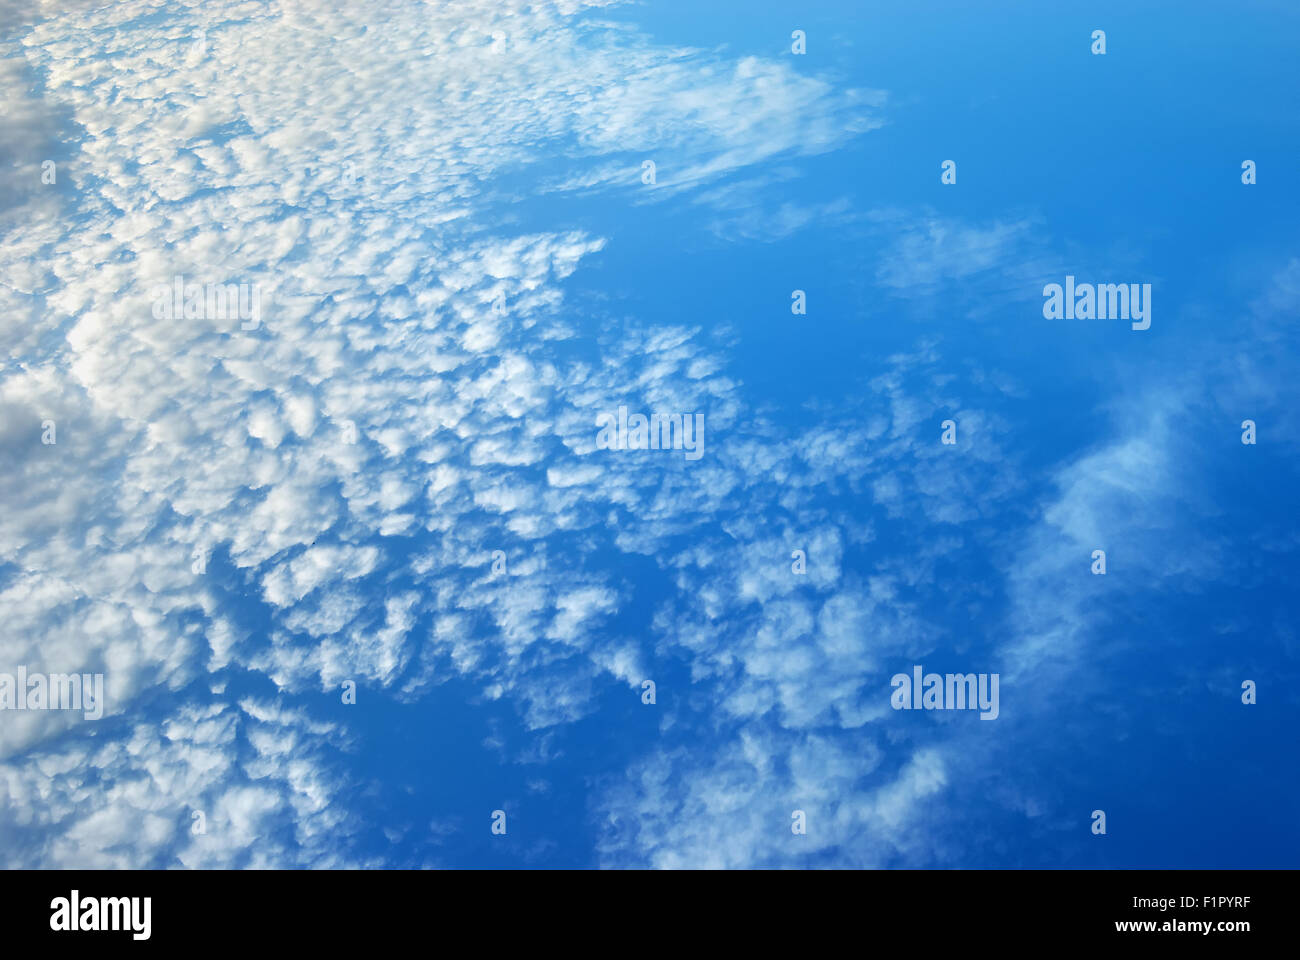 Les nuages blancs dans le ciel bleu. La texture de fond de ciel bleu Banque D'Images